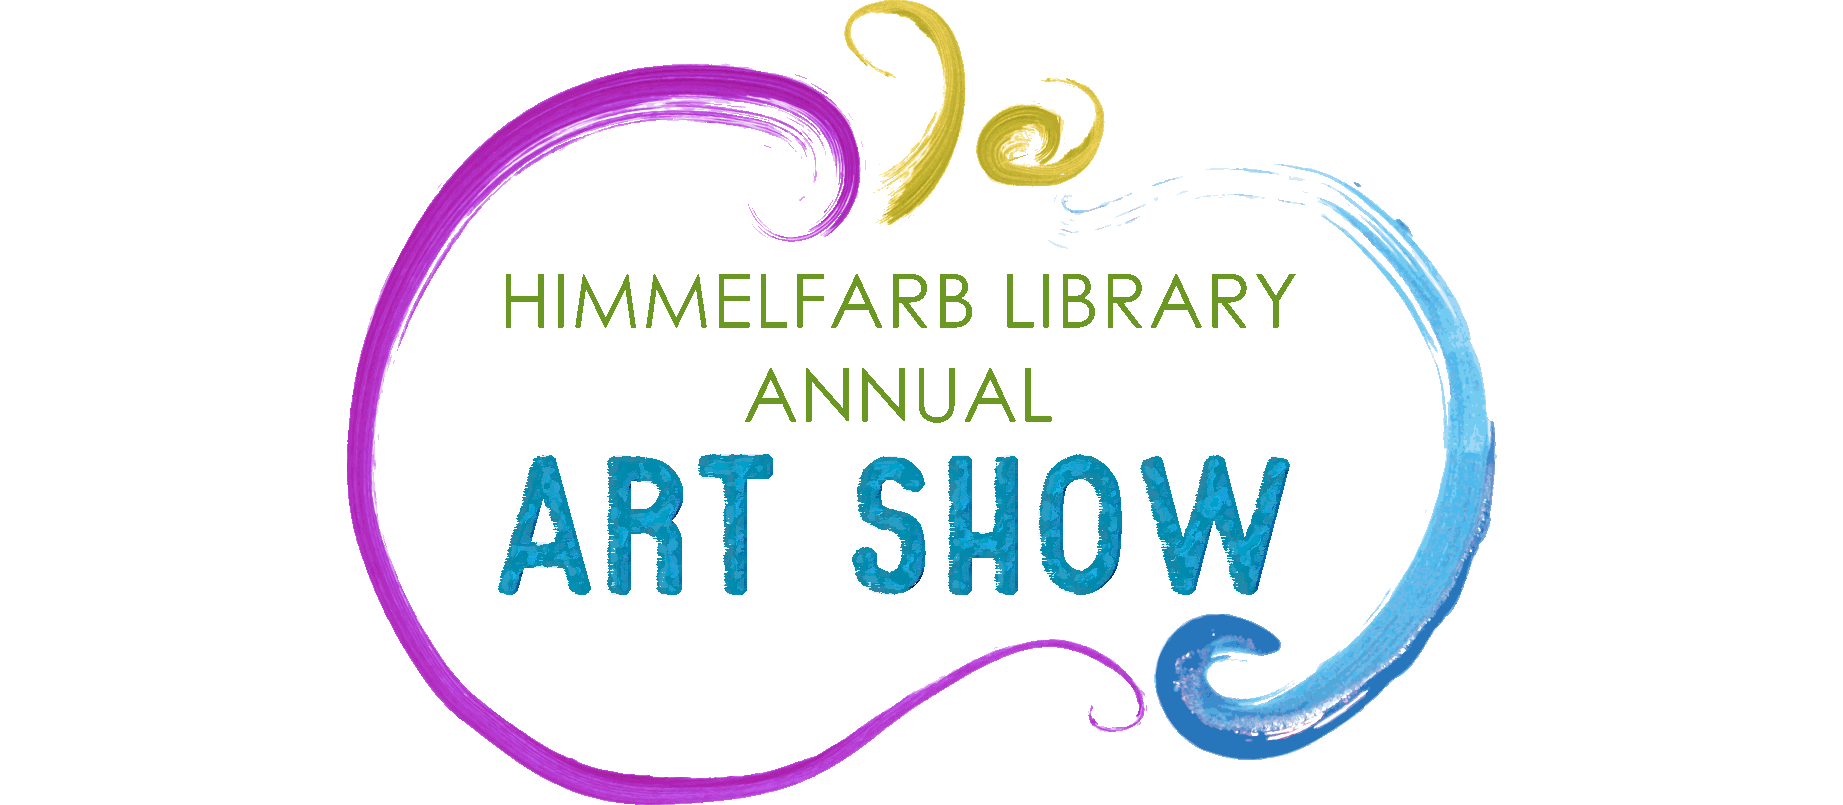 Himmelfarb Library Annual Art Show